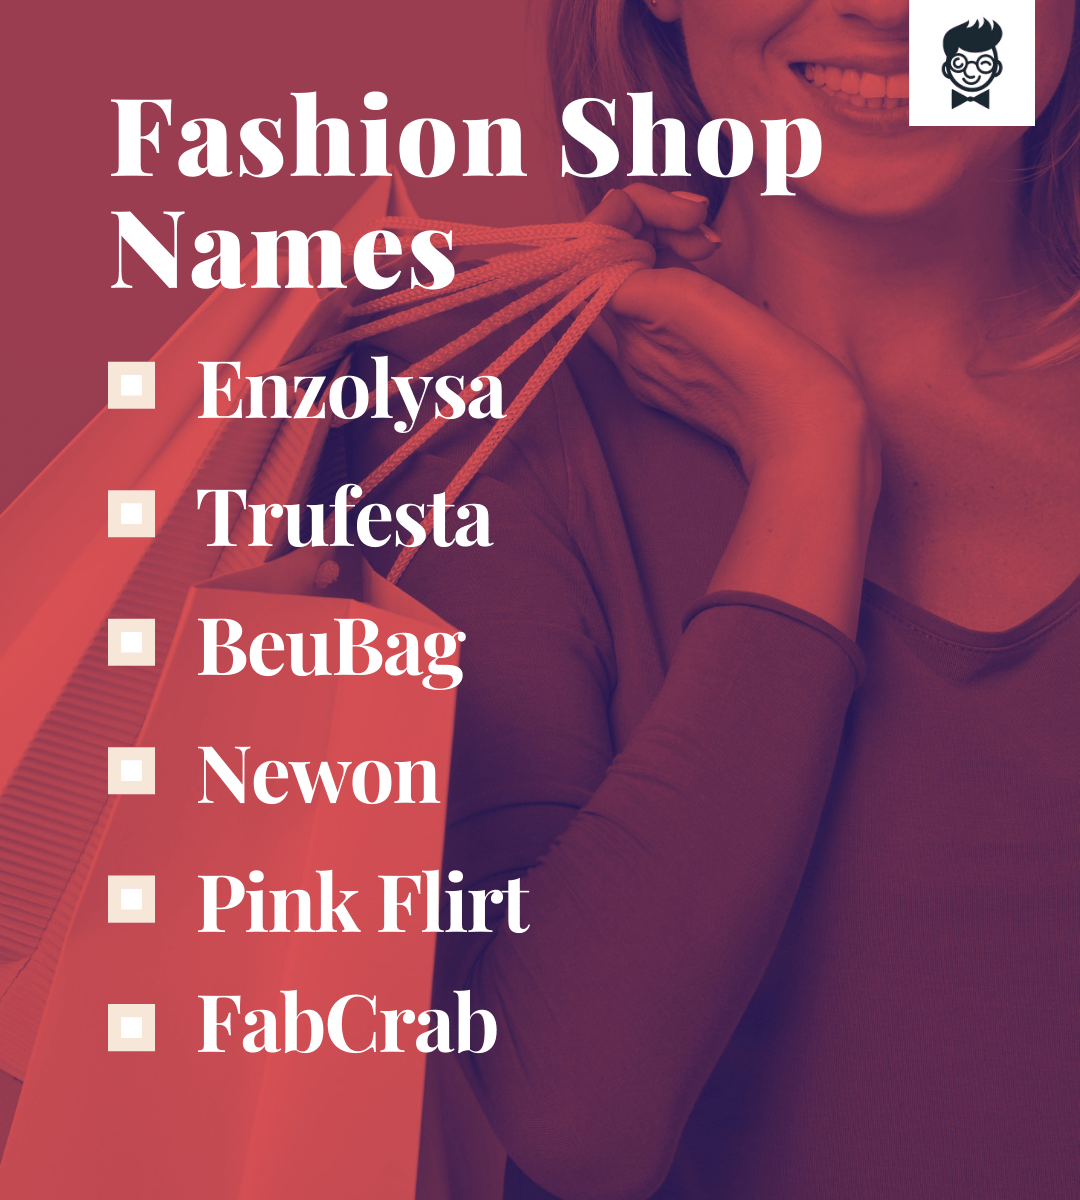 Fashion Shop Names List 